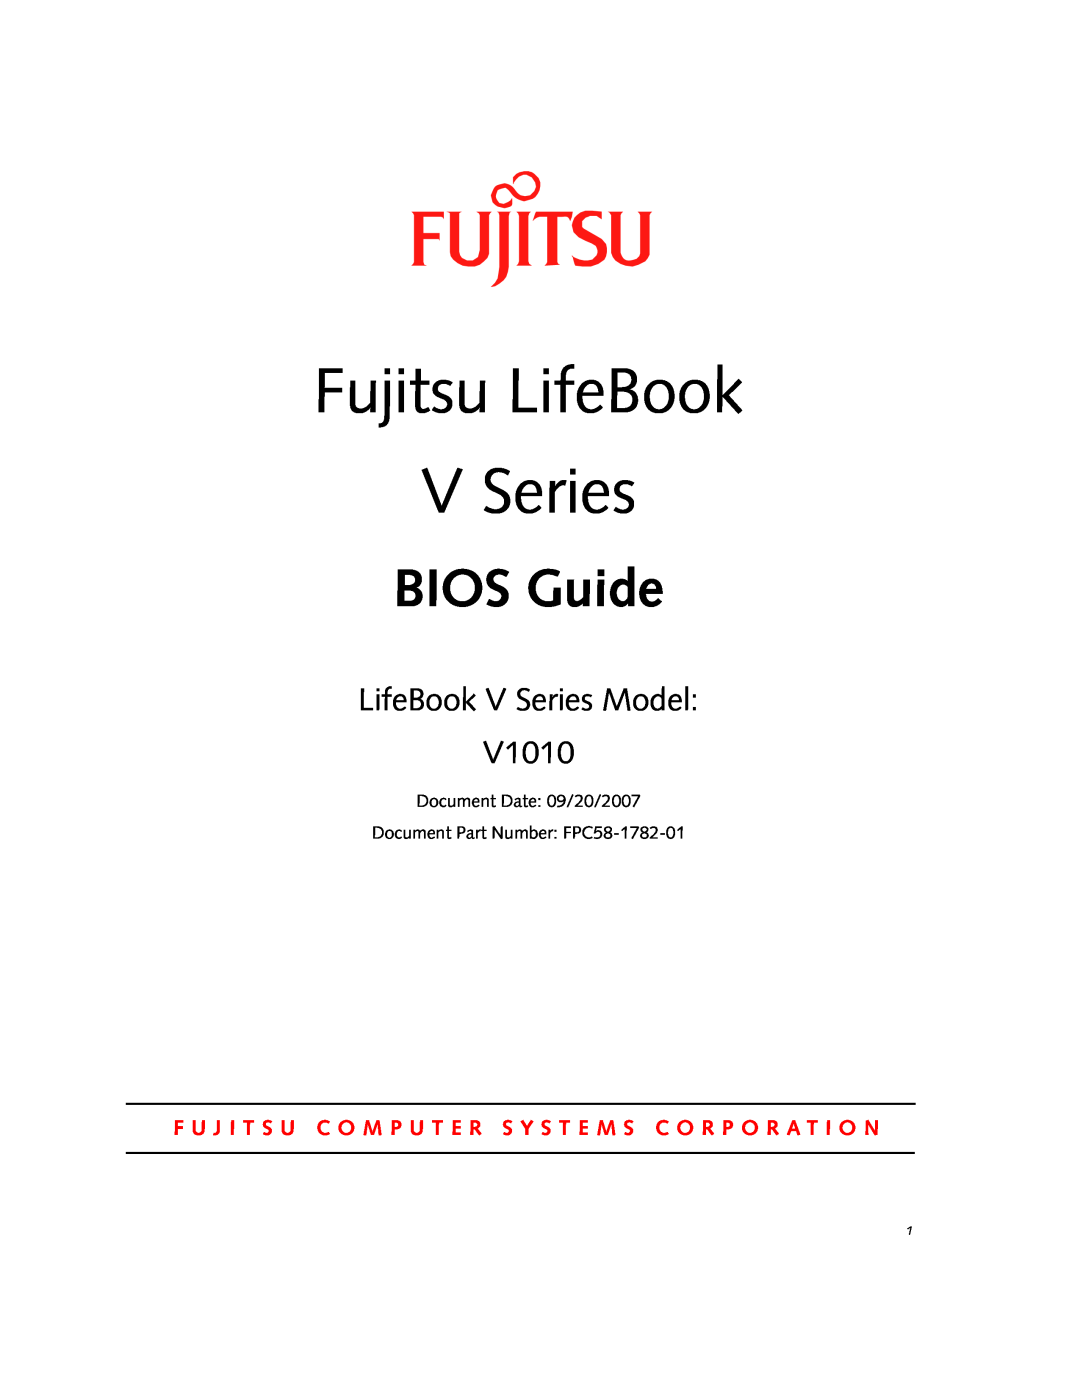 Fujitsu manual Fujitsu LifeBook V Series, BIOS Guide, LifeBook V Series Model V1010 